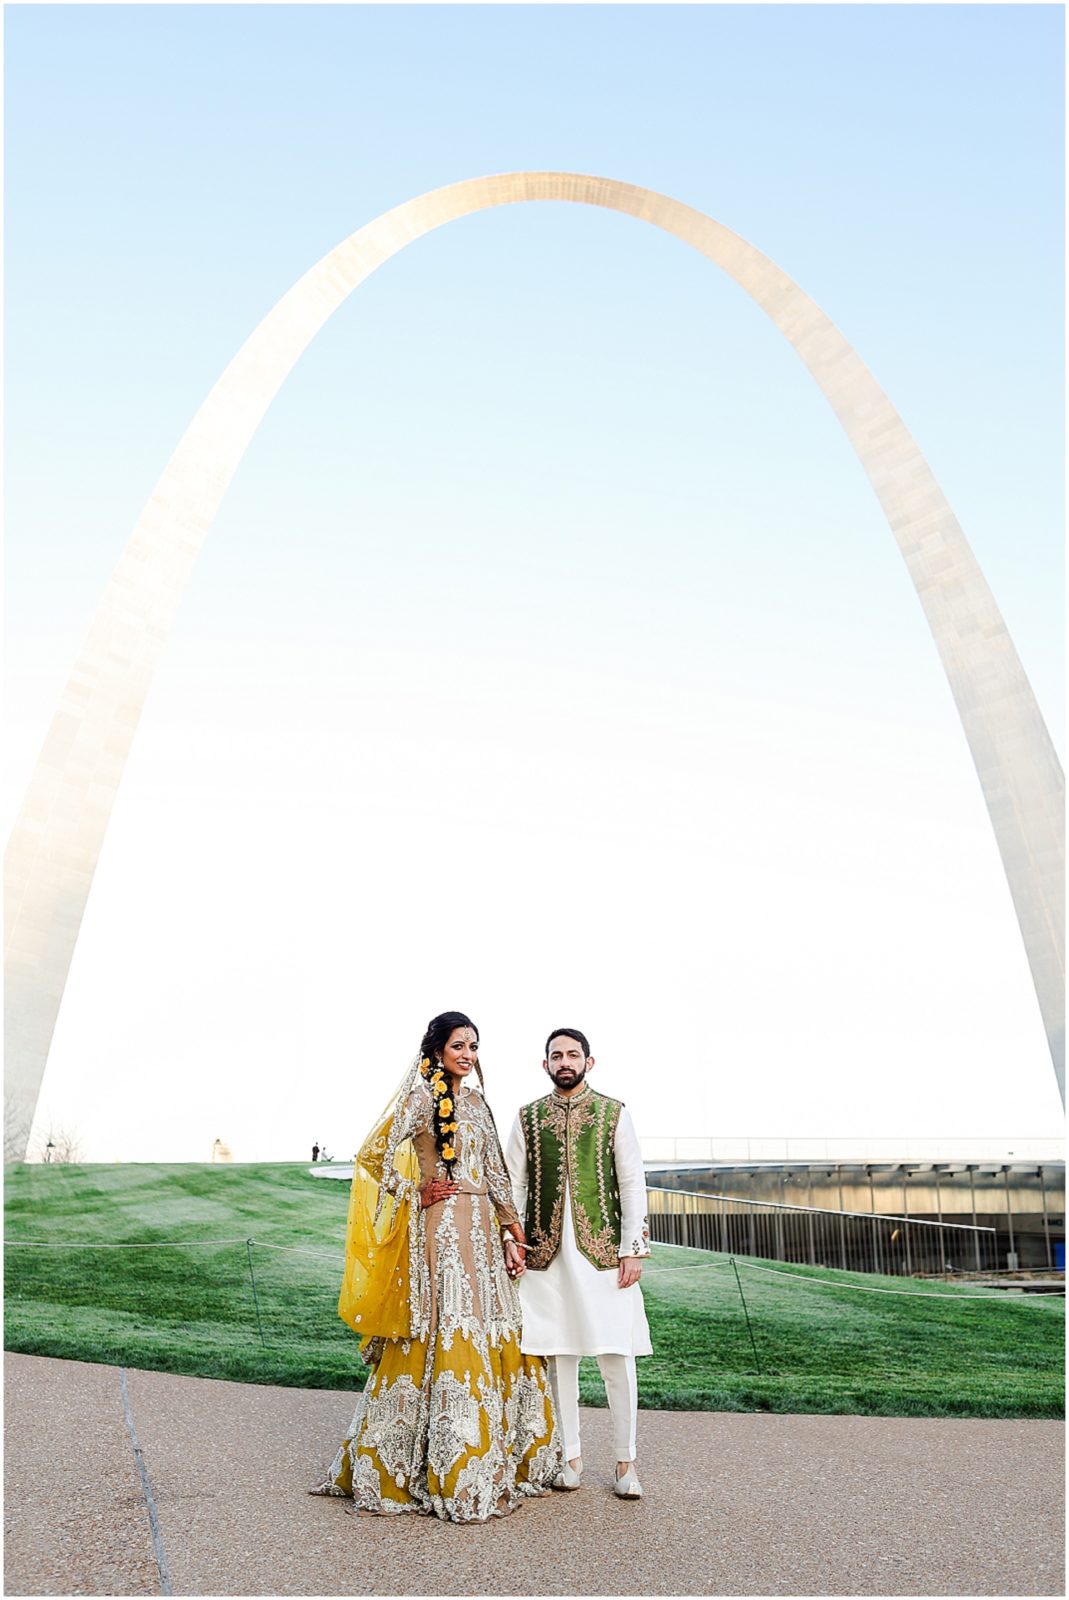 Hyatt Regency St.Louis at the Arch - bride and groom photo